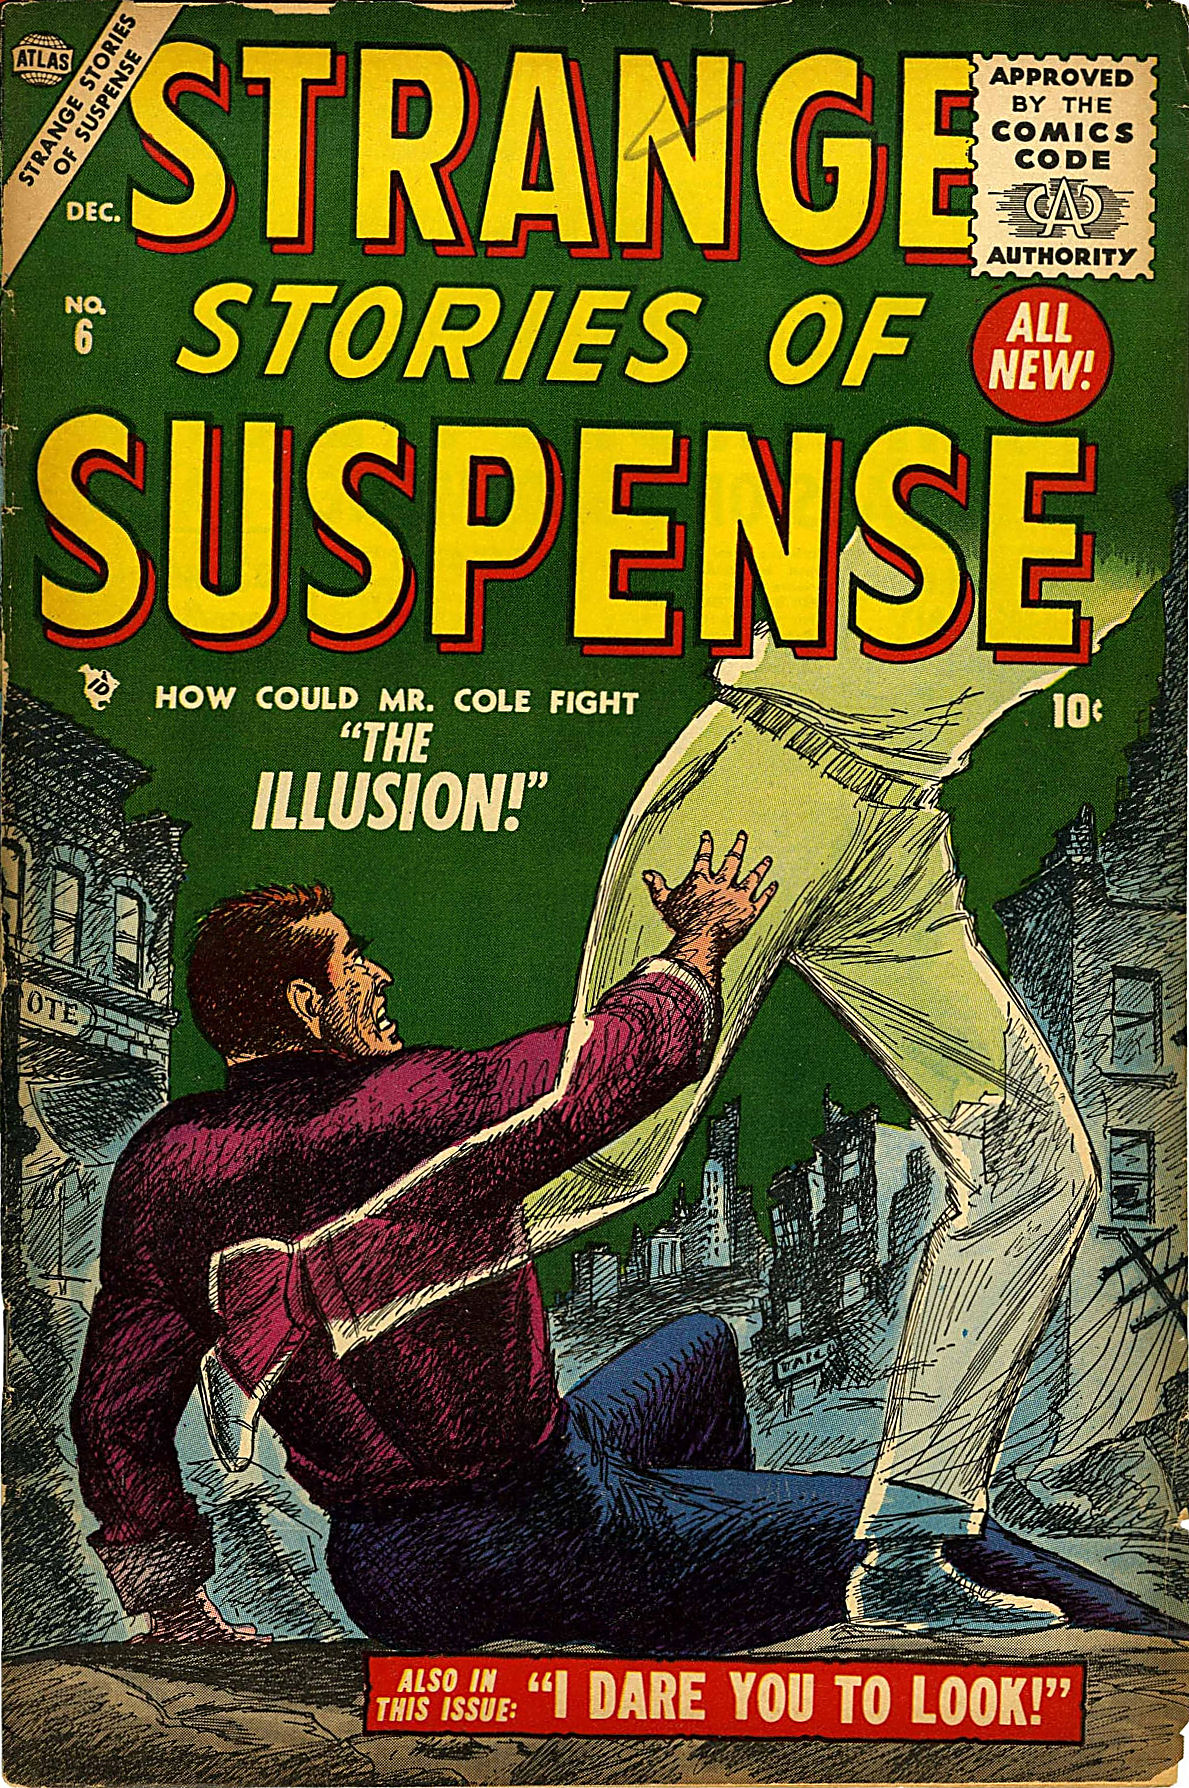 Read online Strange Stories of Suspense comic -  Issue #6 - 2